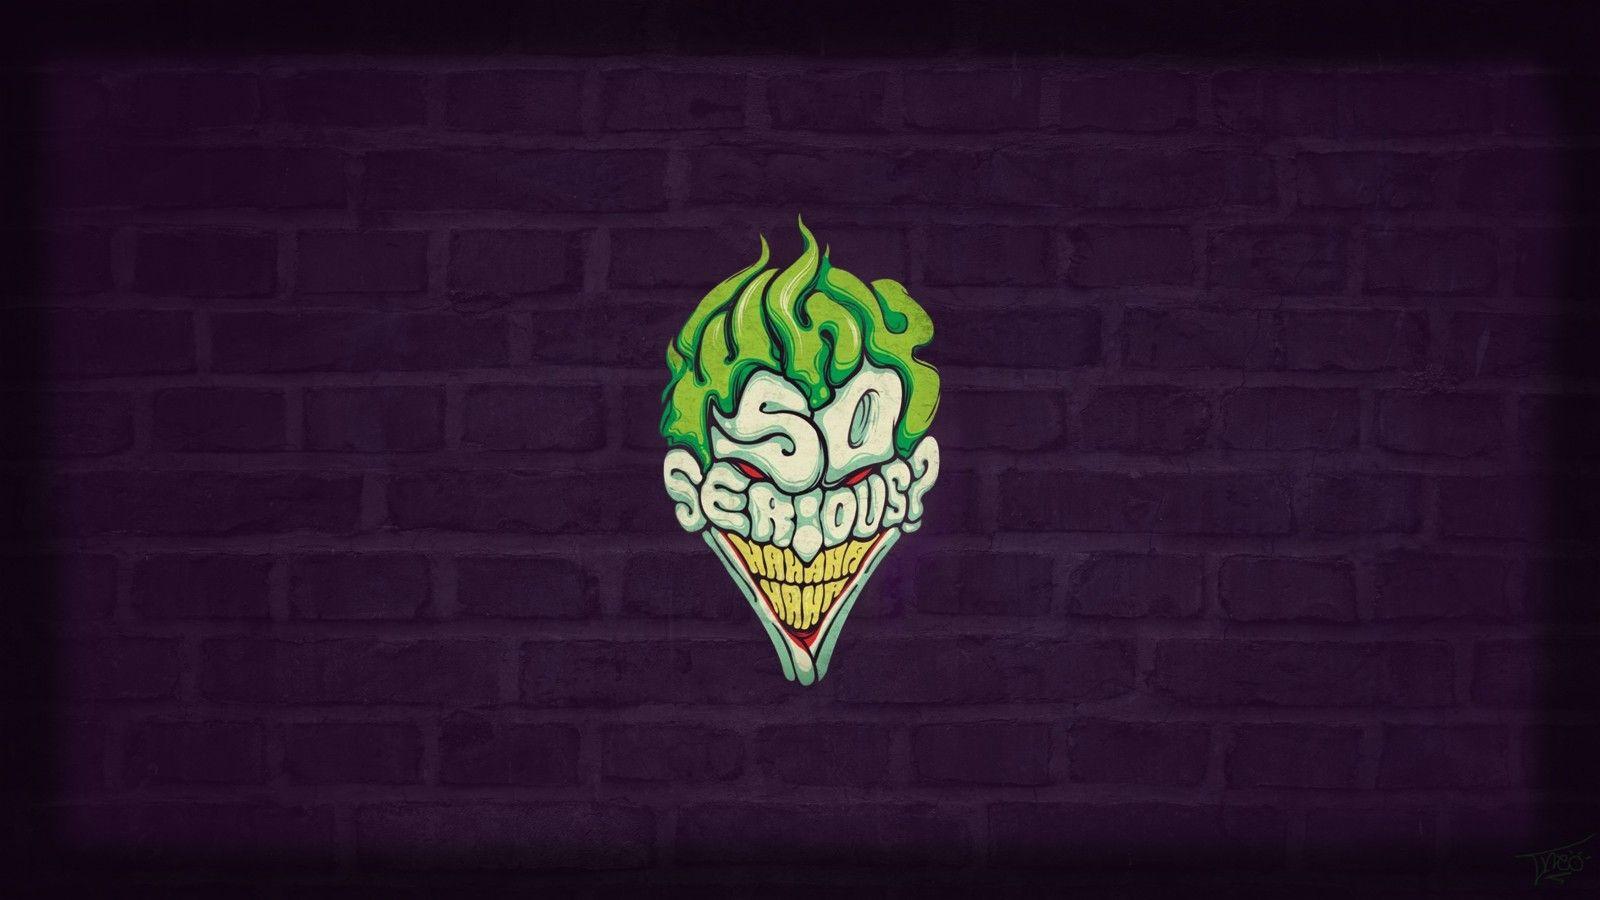 So Serious Joker, HD Typography, 4k Wallpaper, Image, Background